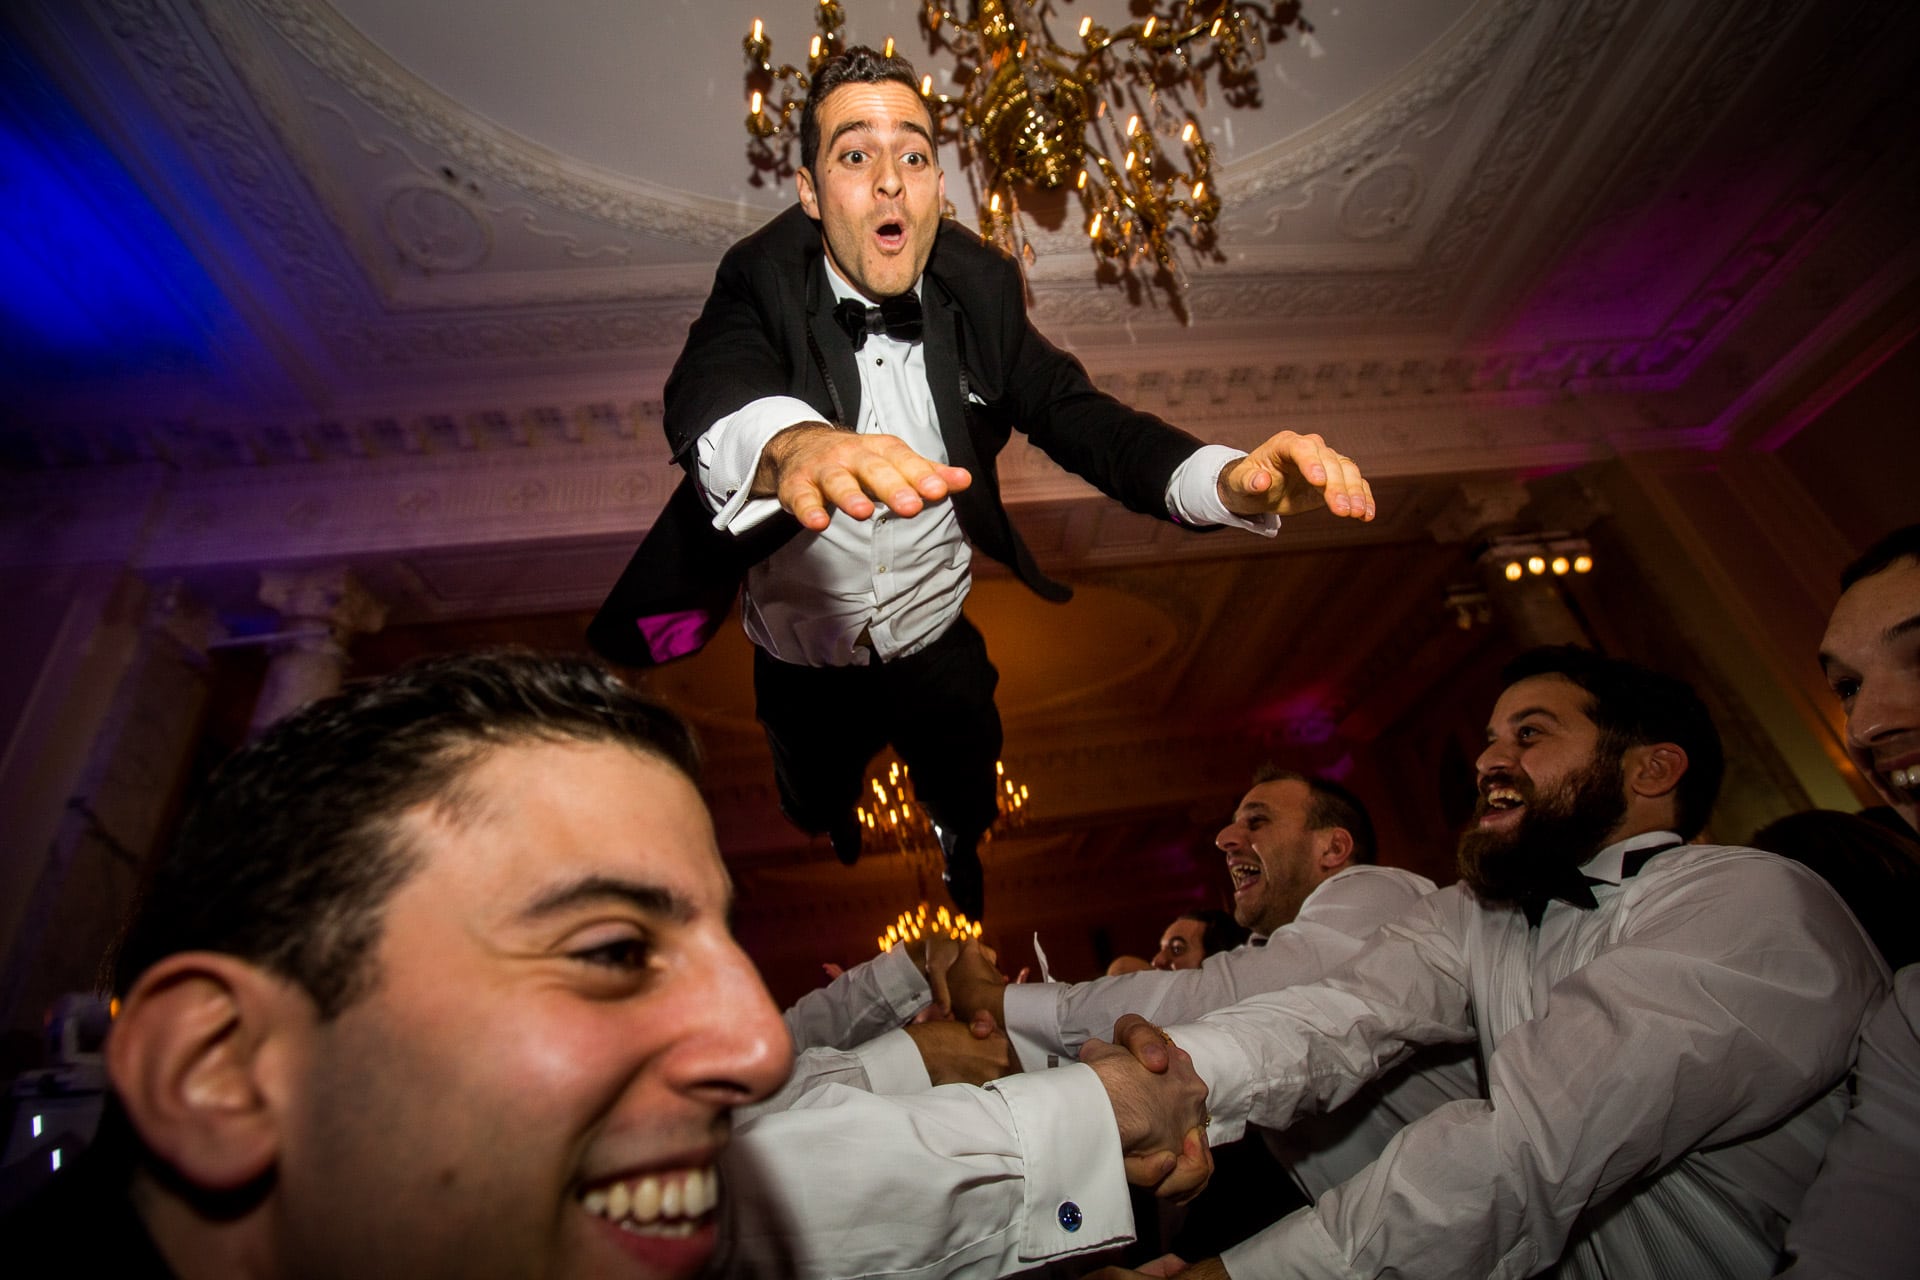 jewish groom flying in the air during Israeli dancing